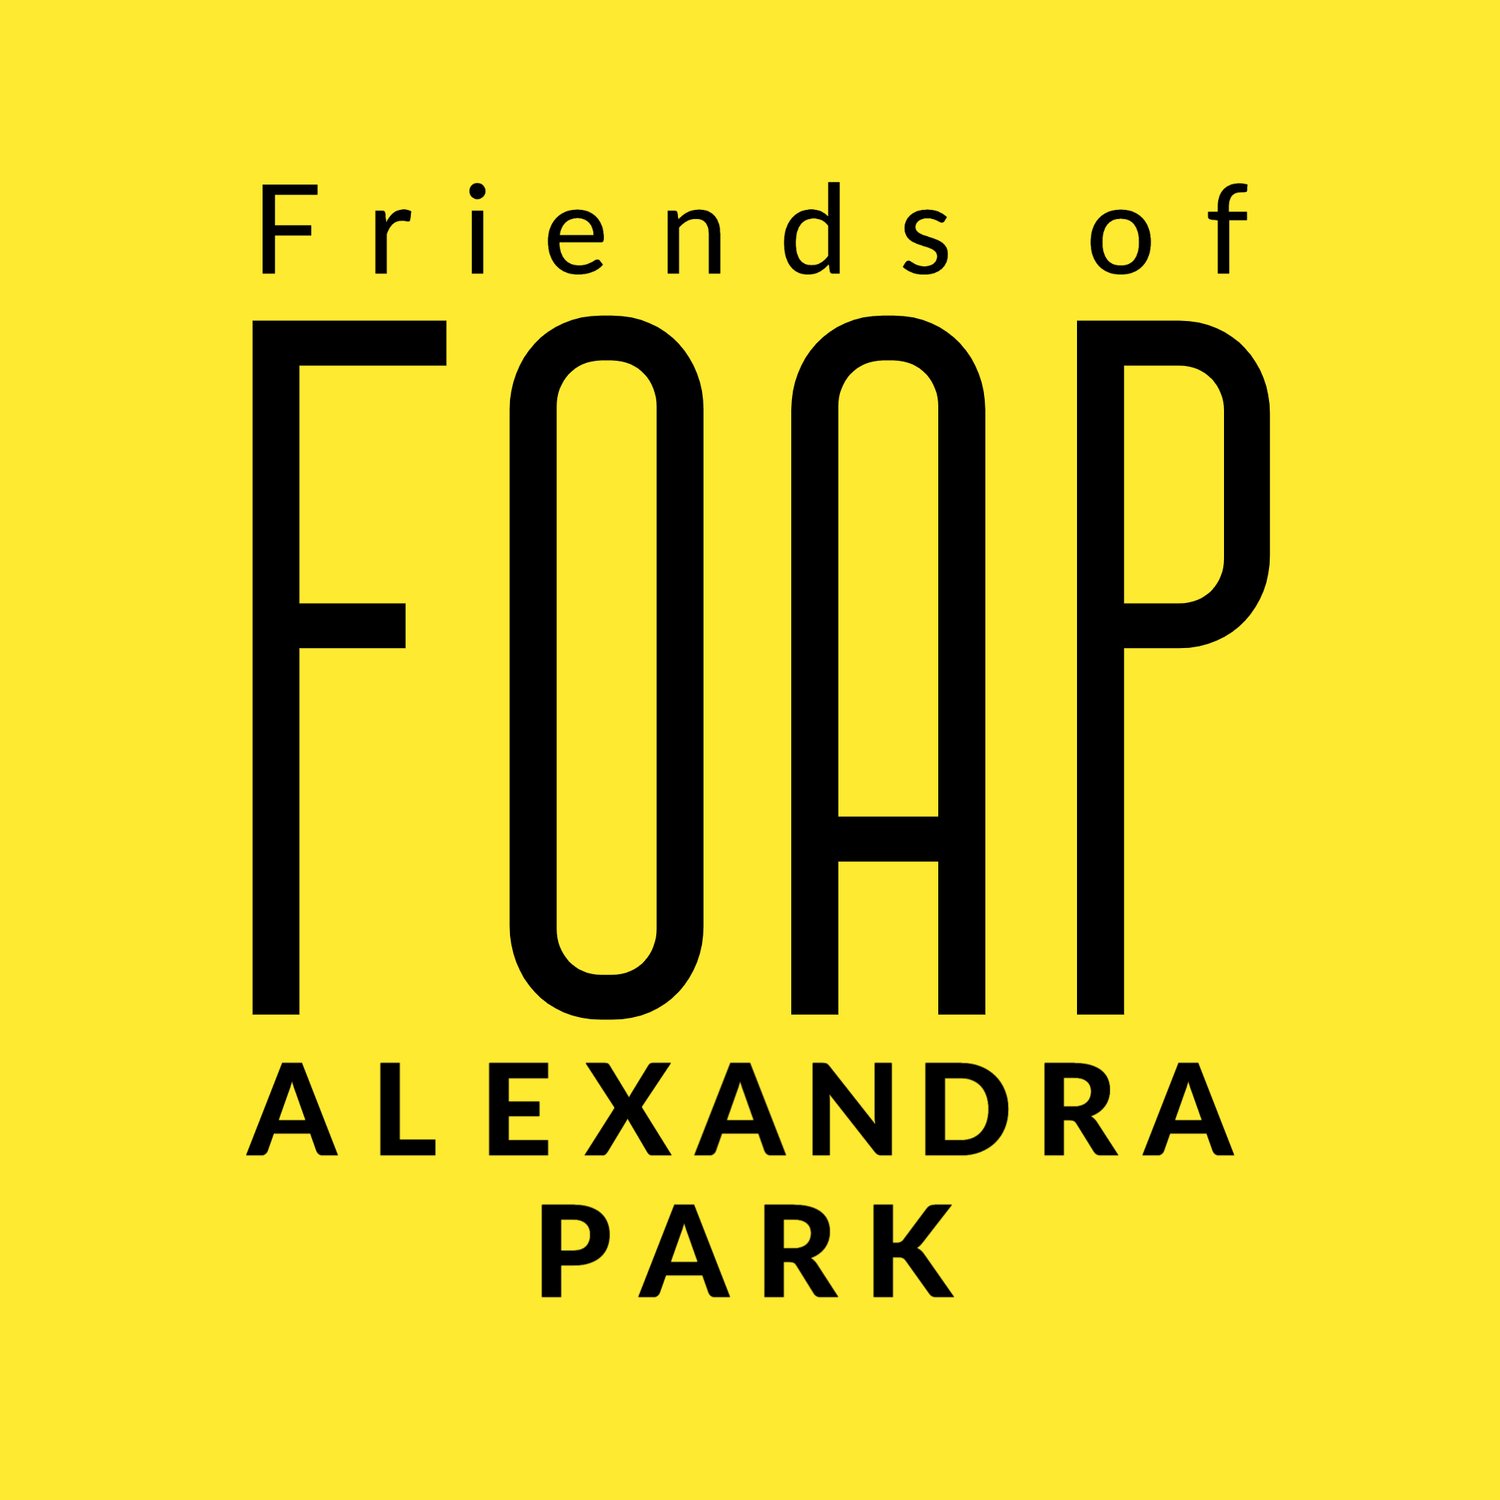 Friends of Alexandra Park